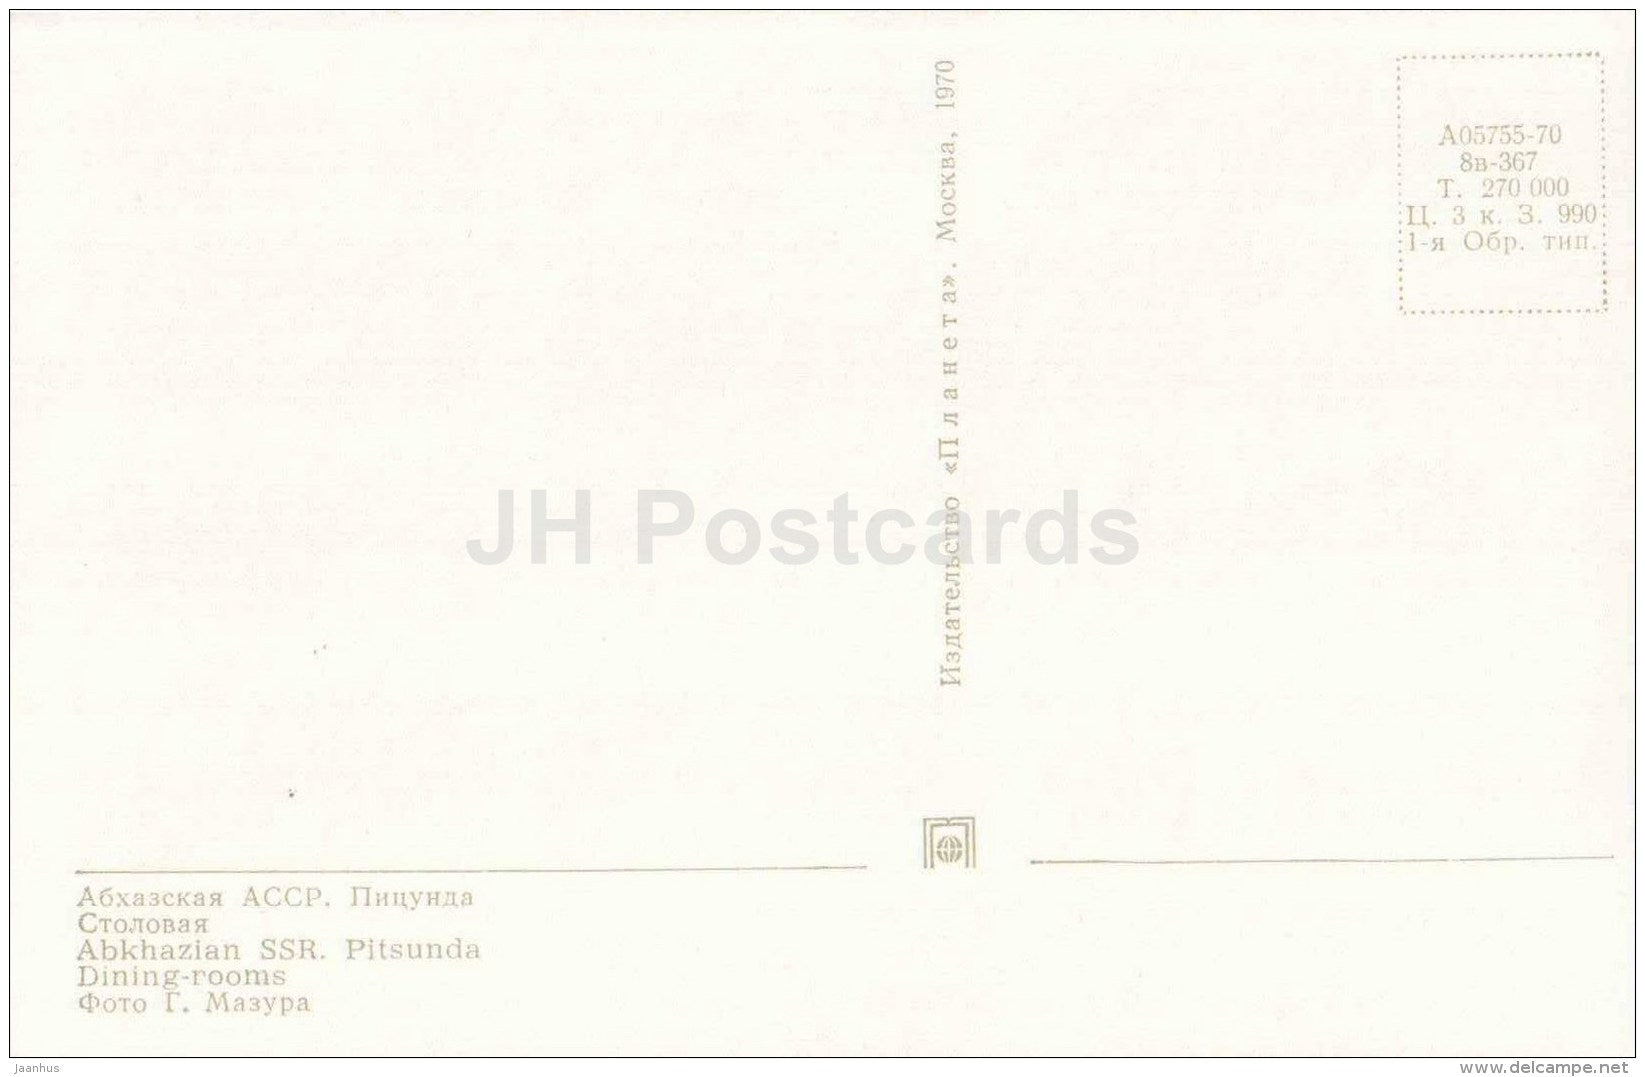 dining rooms - Pitsunda - Abkhazia - 1970 - Georgia USSR - unused - JH Postcards